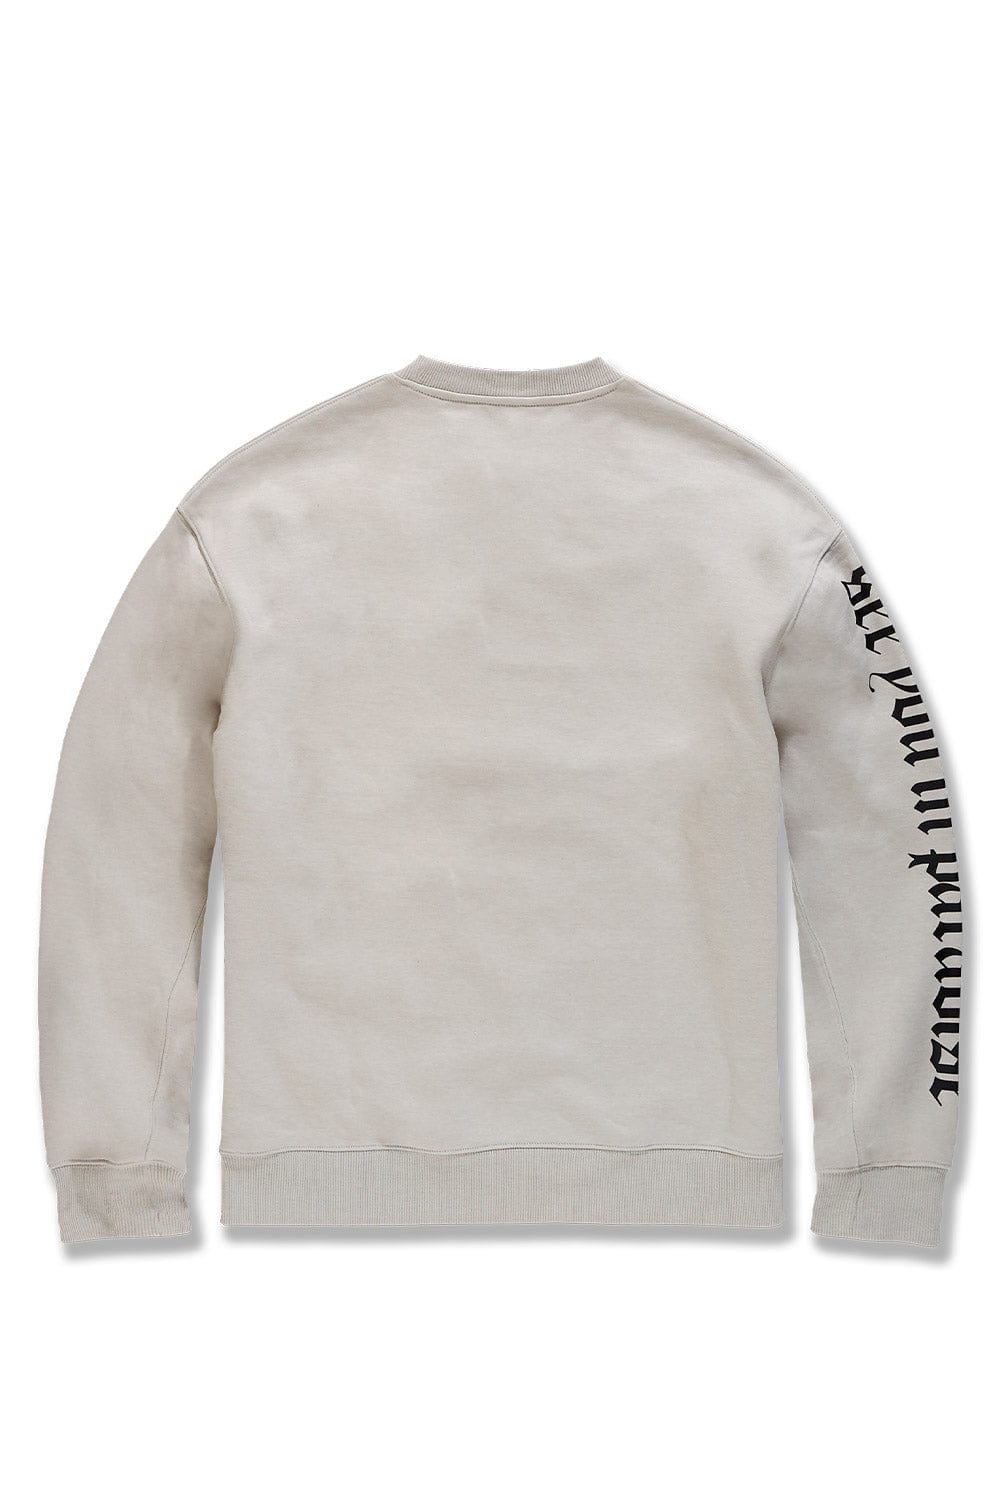 Jordan Craig Blessed Crewneck Sweatshirt (Concrete)